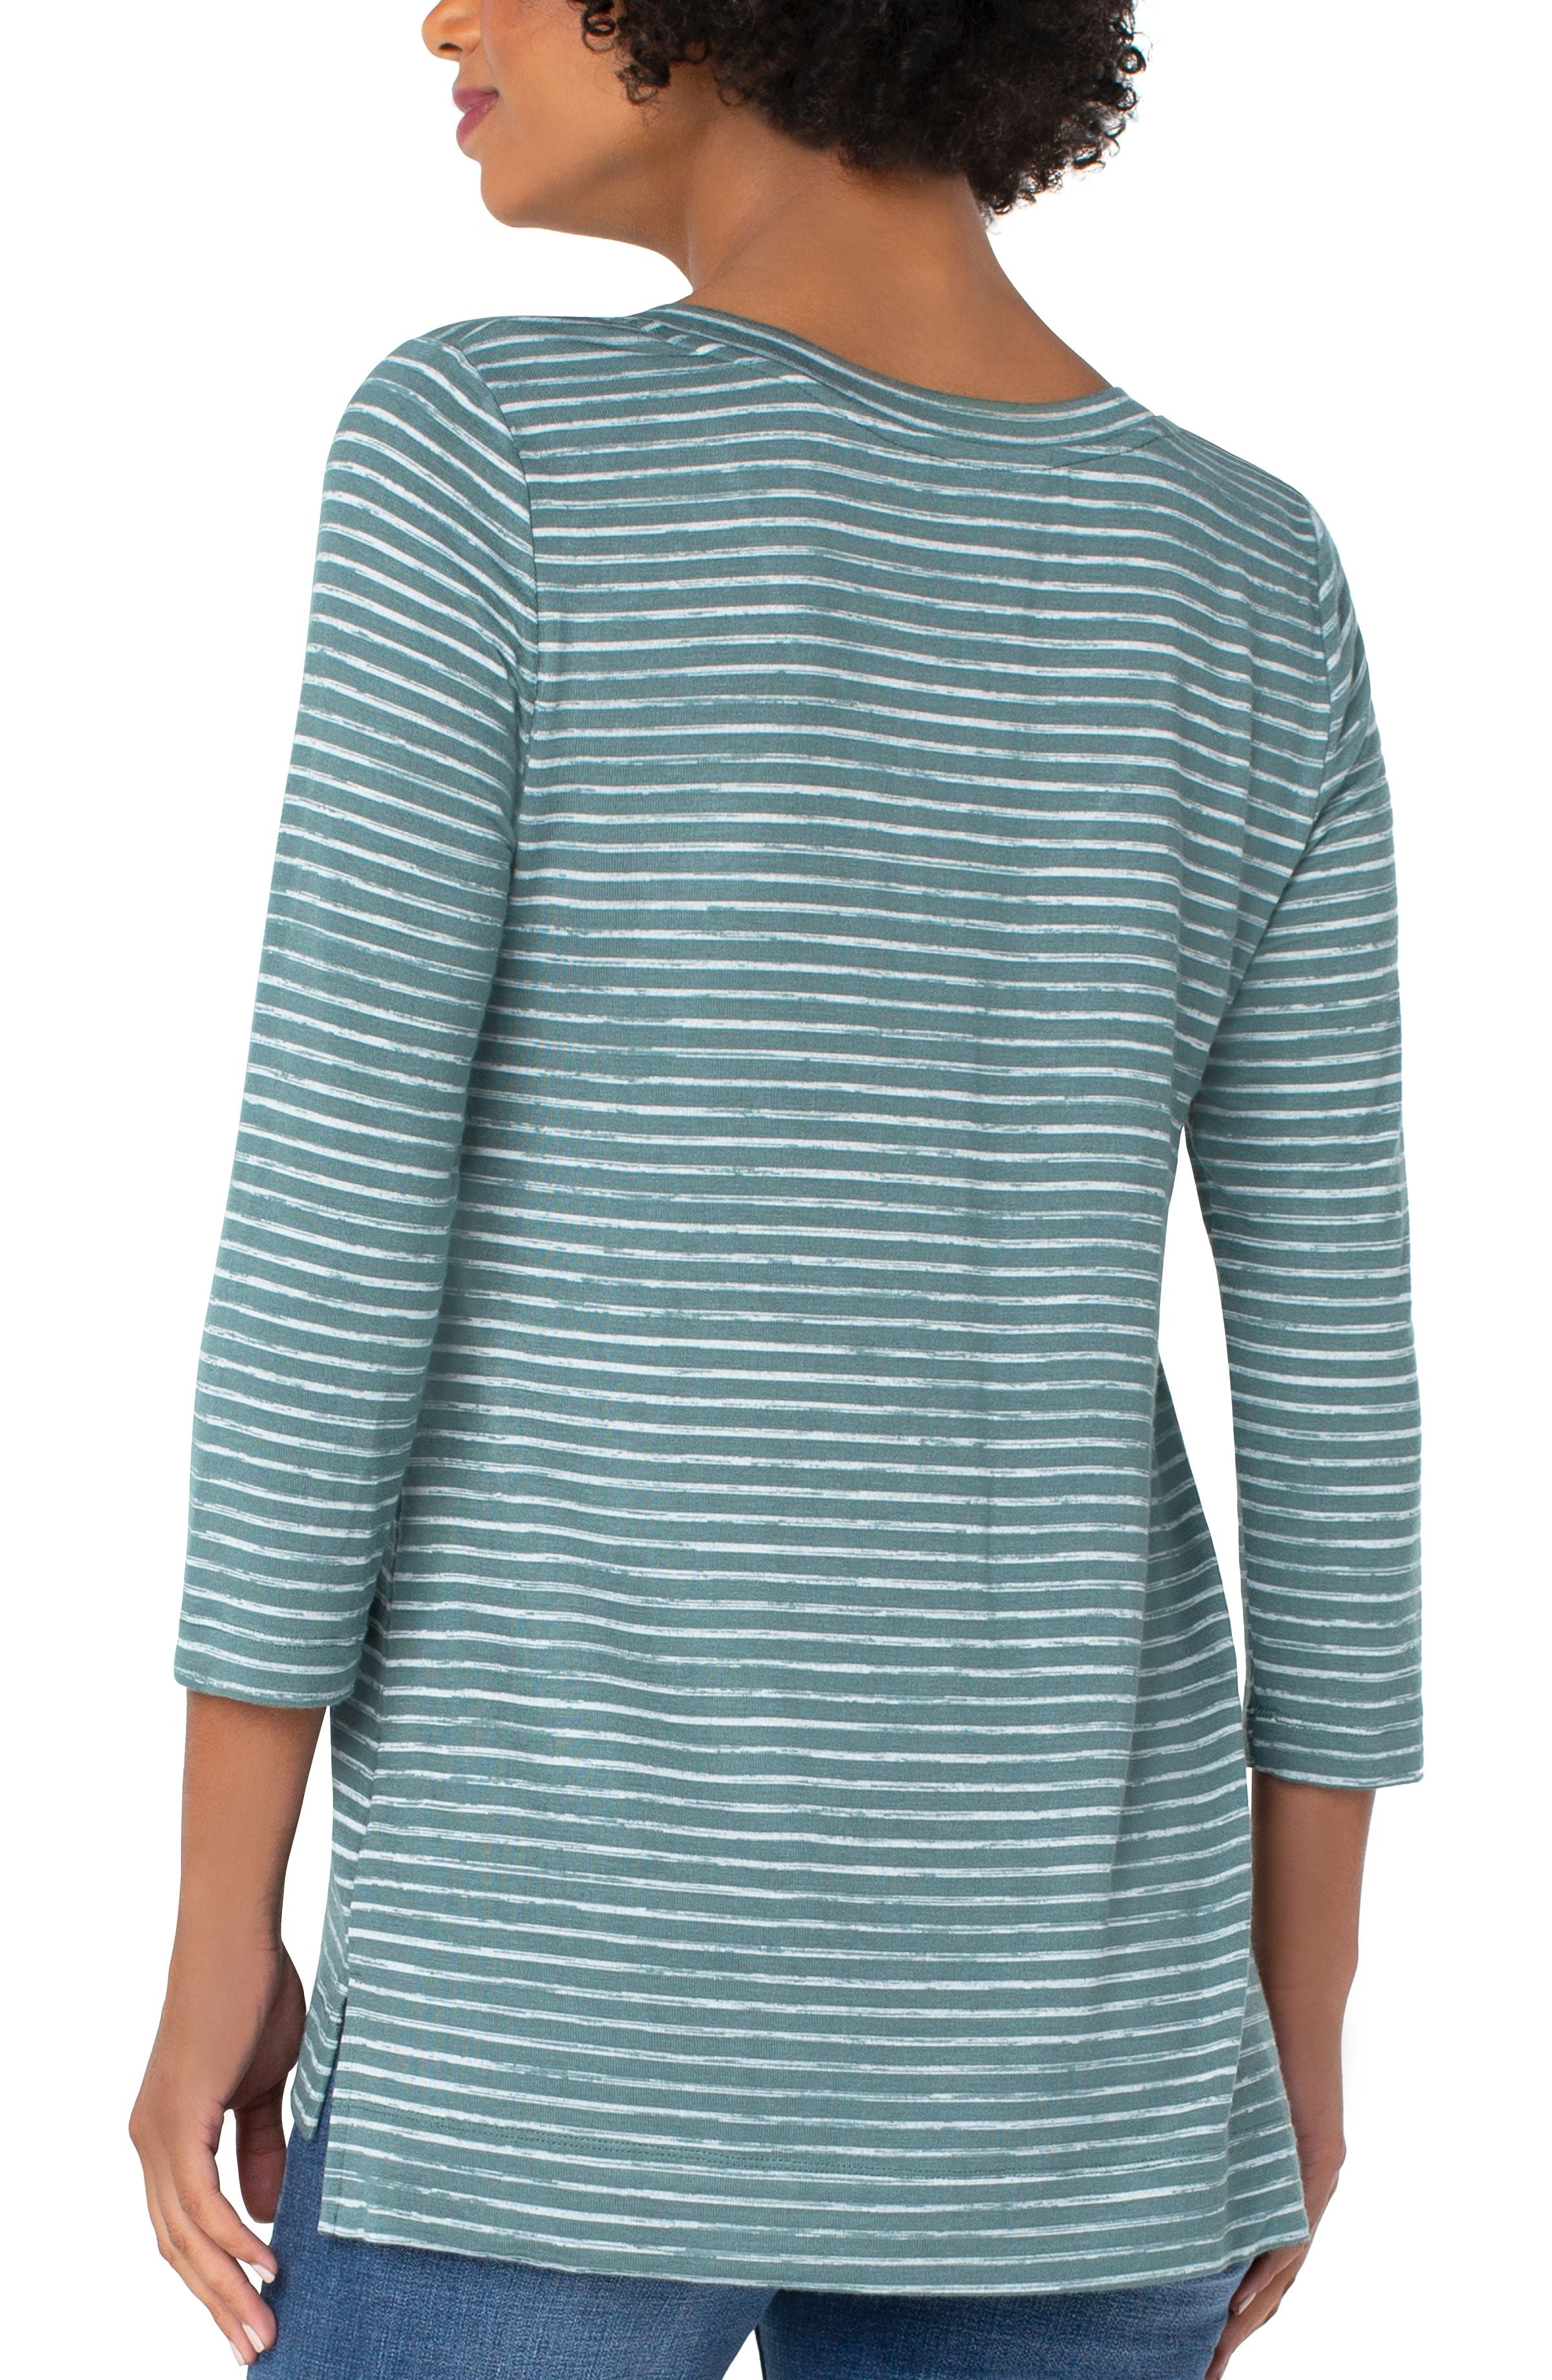 3/4 Sleeve Vneck Knit Top - Shale Green Striped